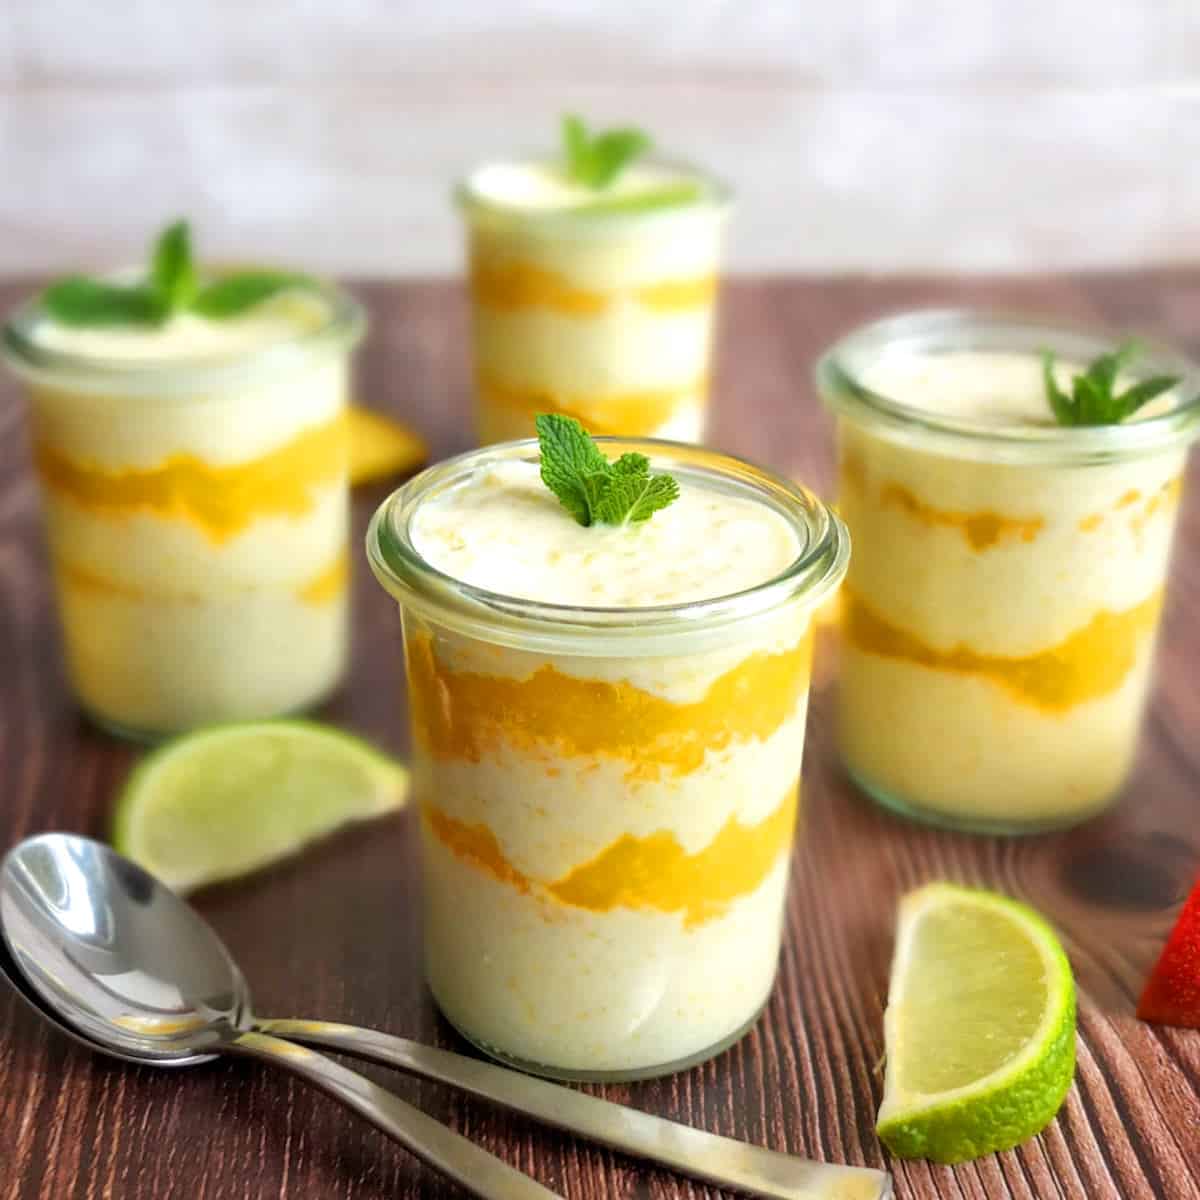 Easy Mango Cream Dessert with Lime - My Dinner